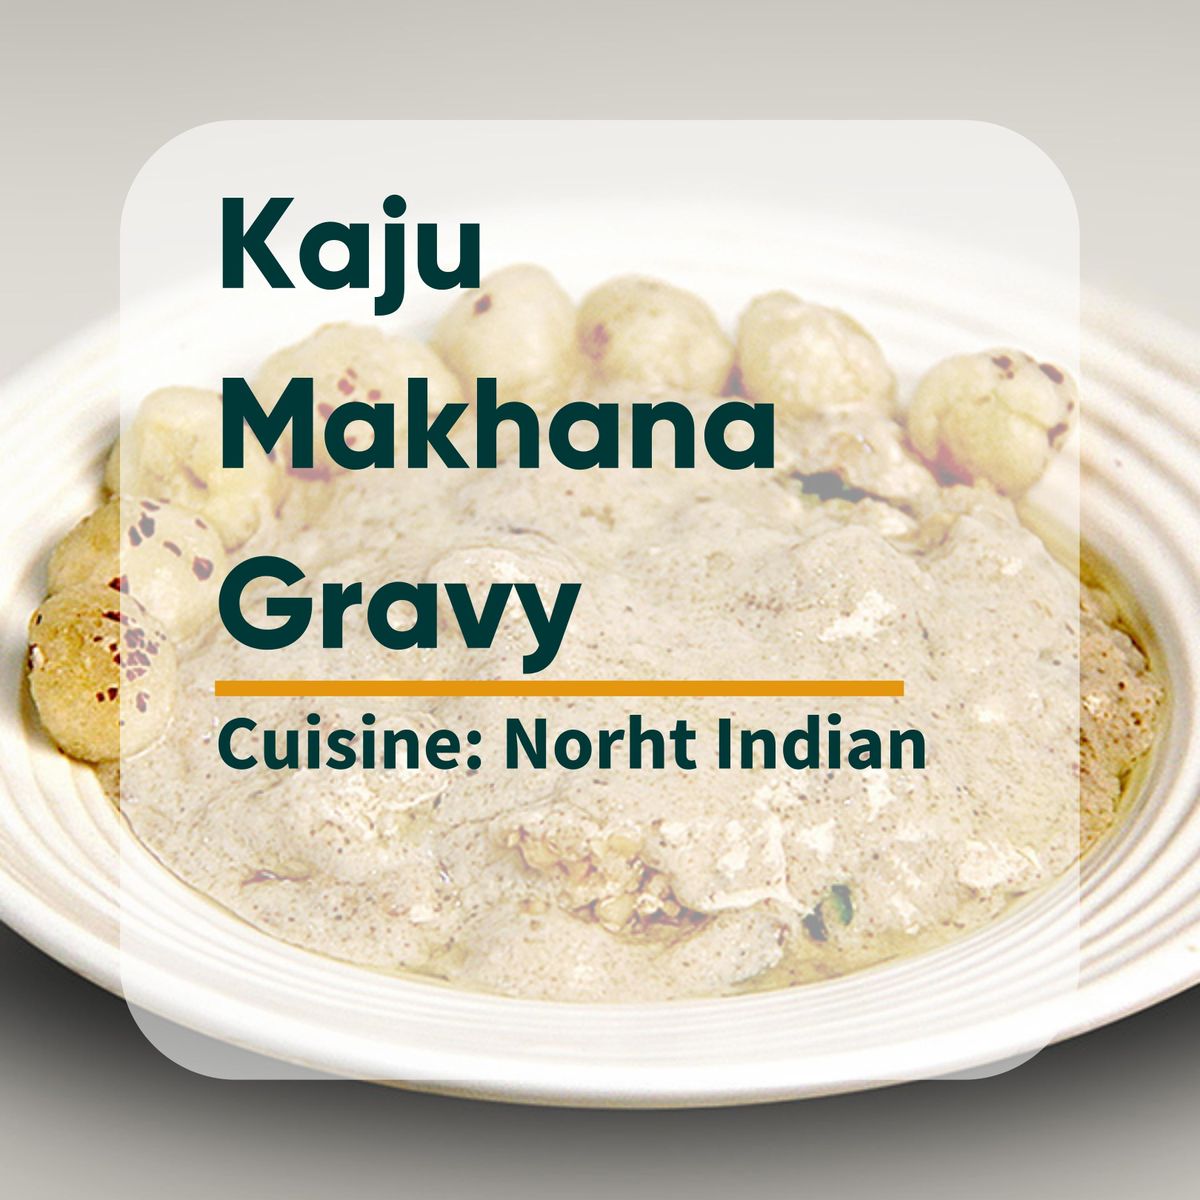 Kaju Makhana Gravy Image